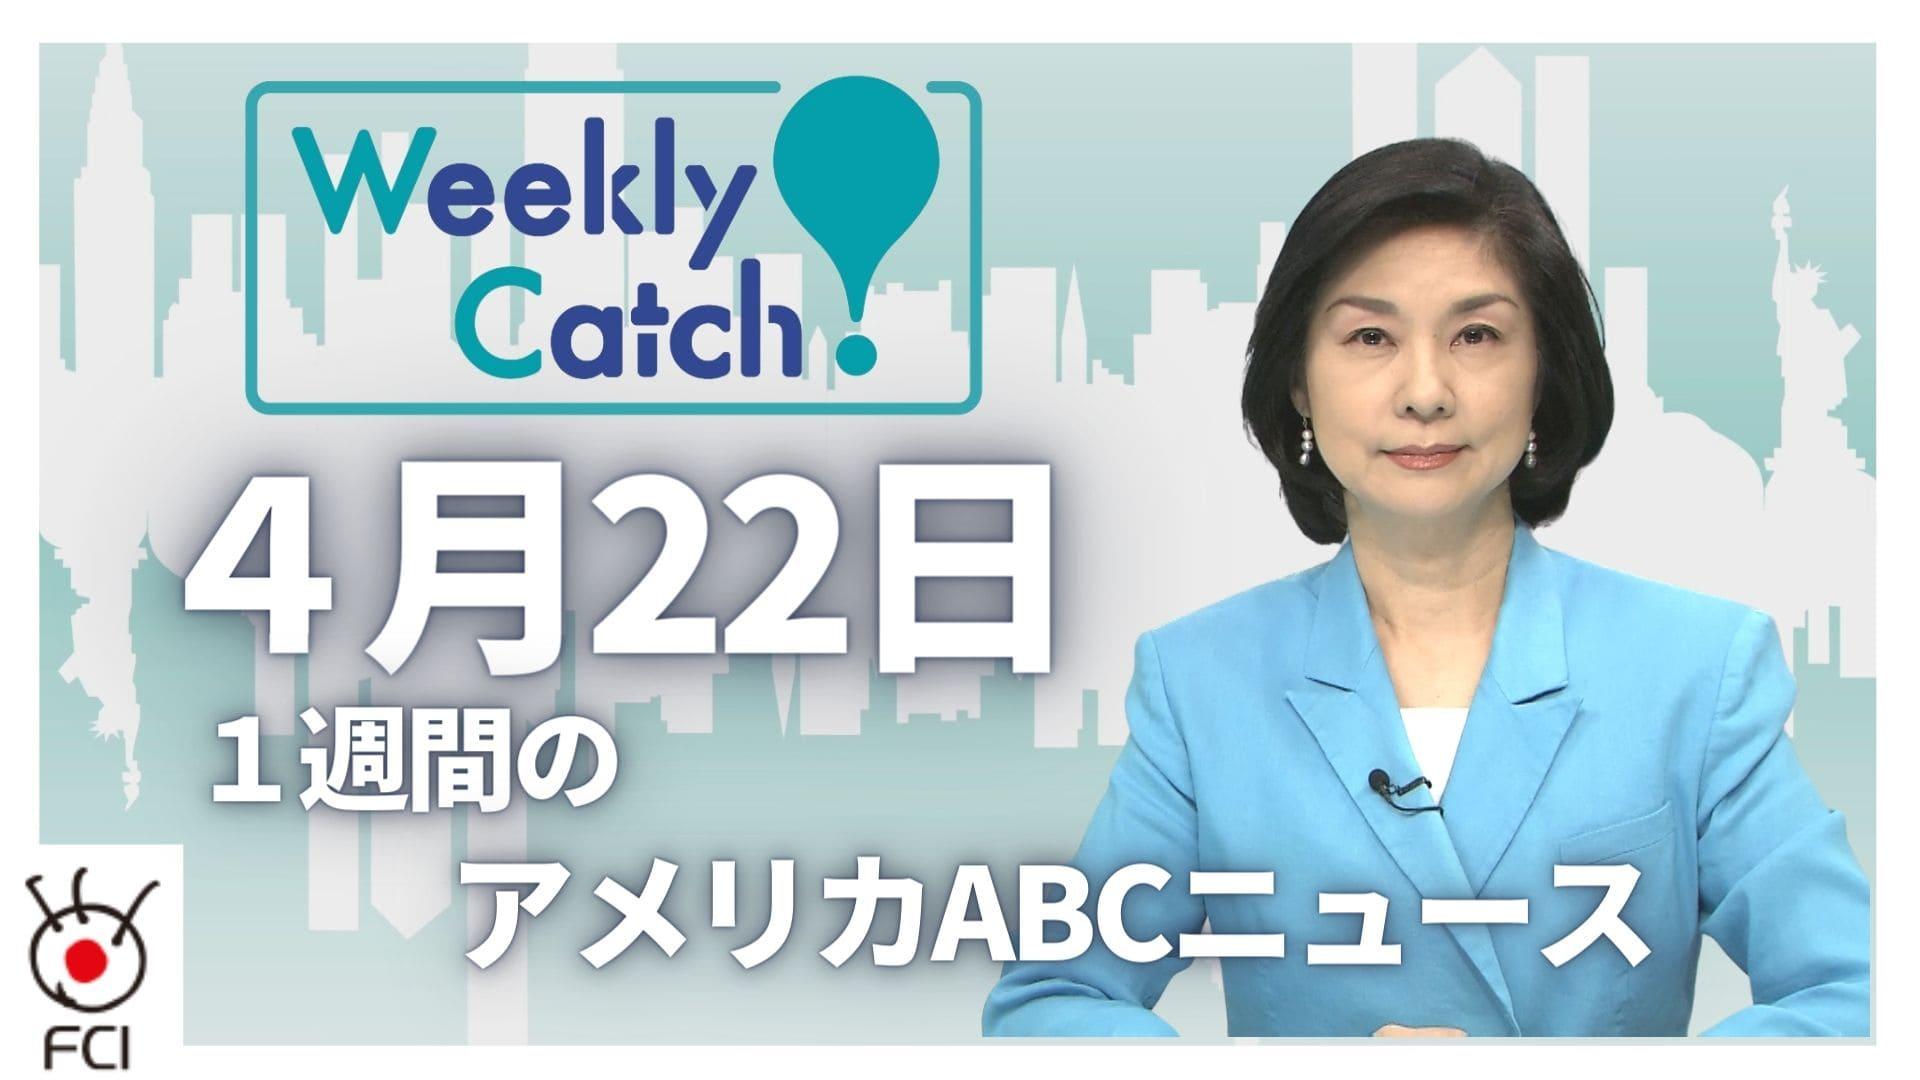 4月22日 Weekly Catch!